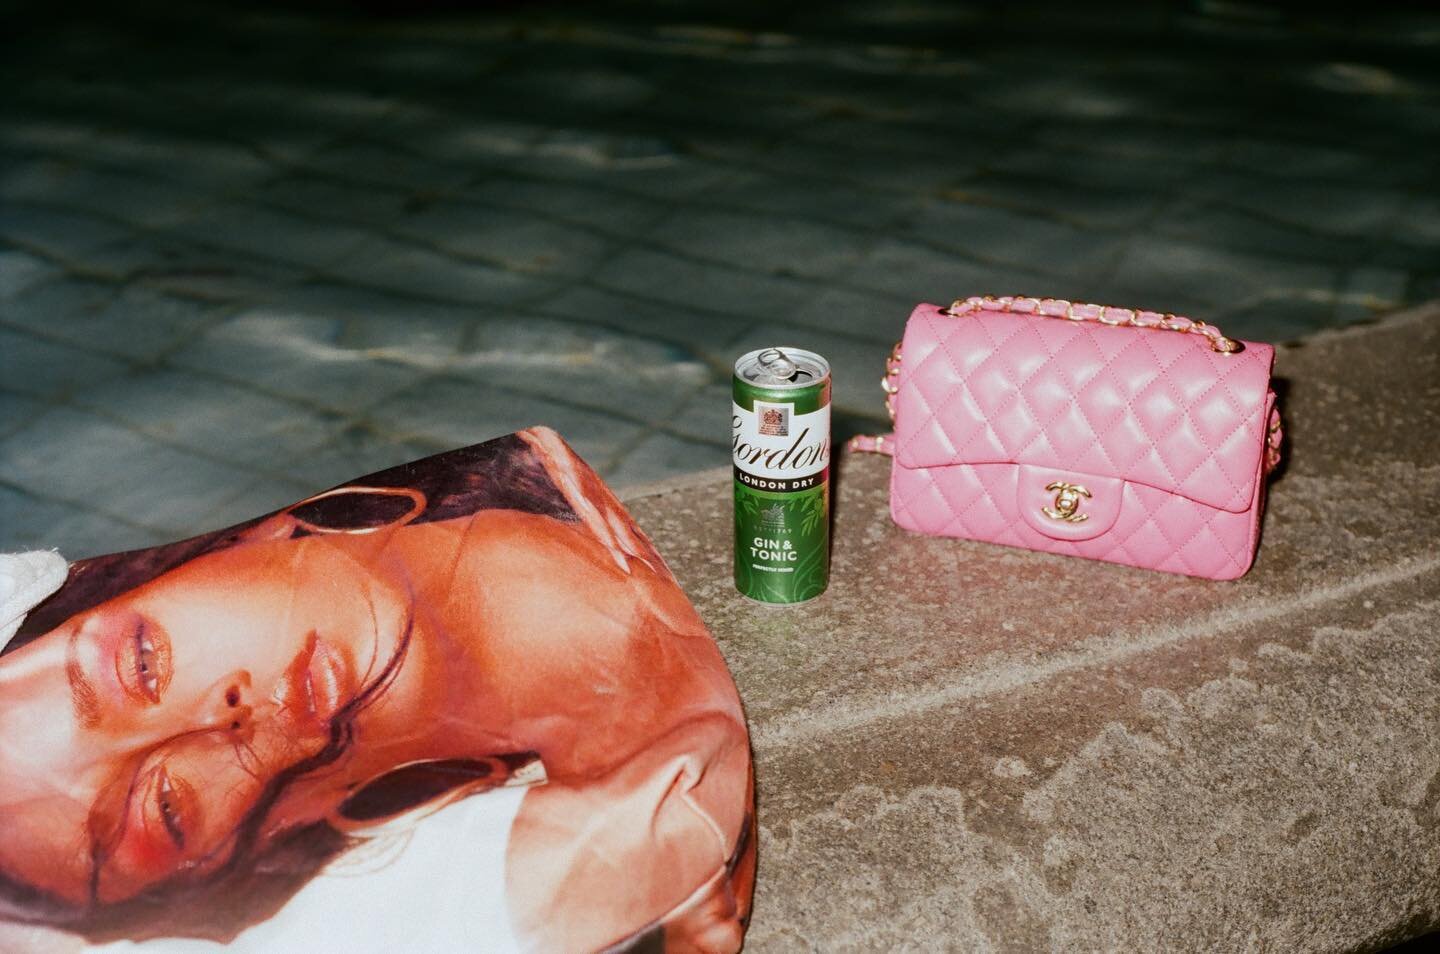 💗 London essentials on #35mm film shot in Trafalgar Square : Chanel bag, G n T and Rihanna&rsquo;s face. Thank you @darcieduck @nectarinegirl 

#rebeccazephyrthomas #stilllife #35mm #Rihanna #fanculture